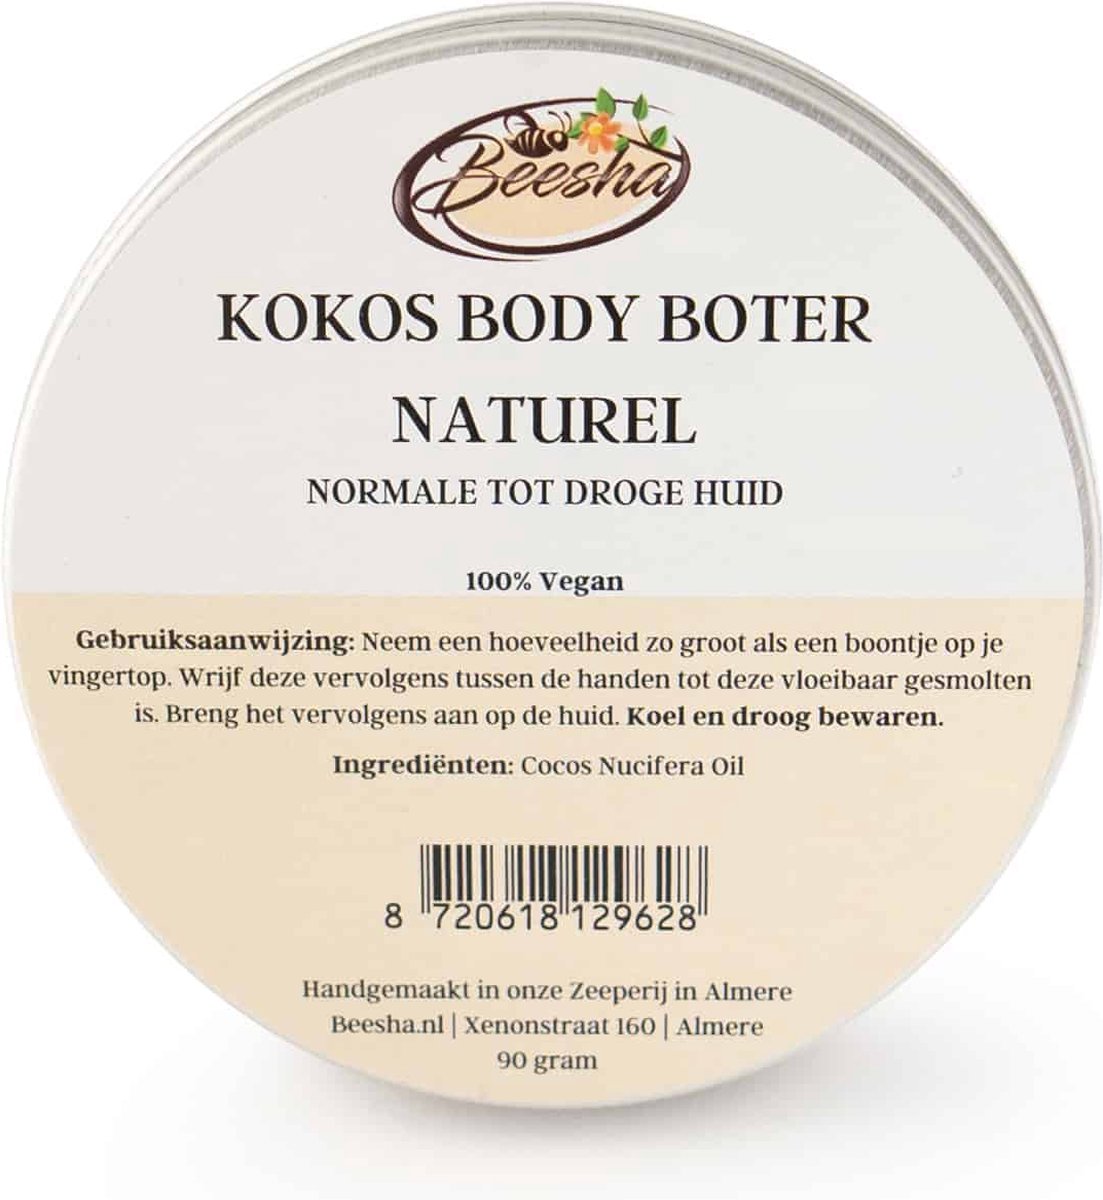 Beesha Kokos Body Boter Naturel